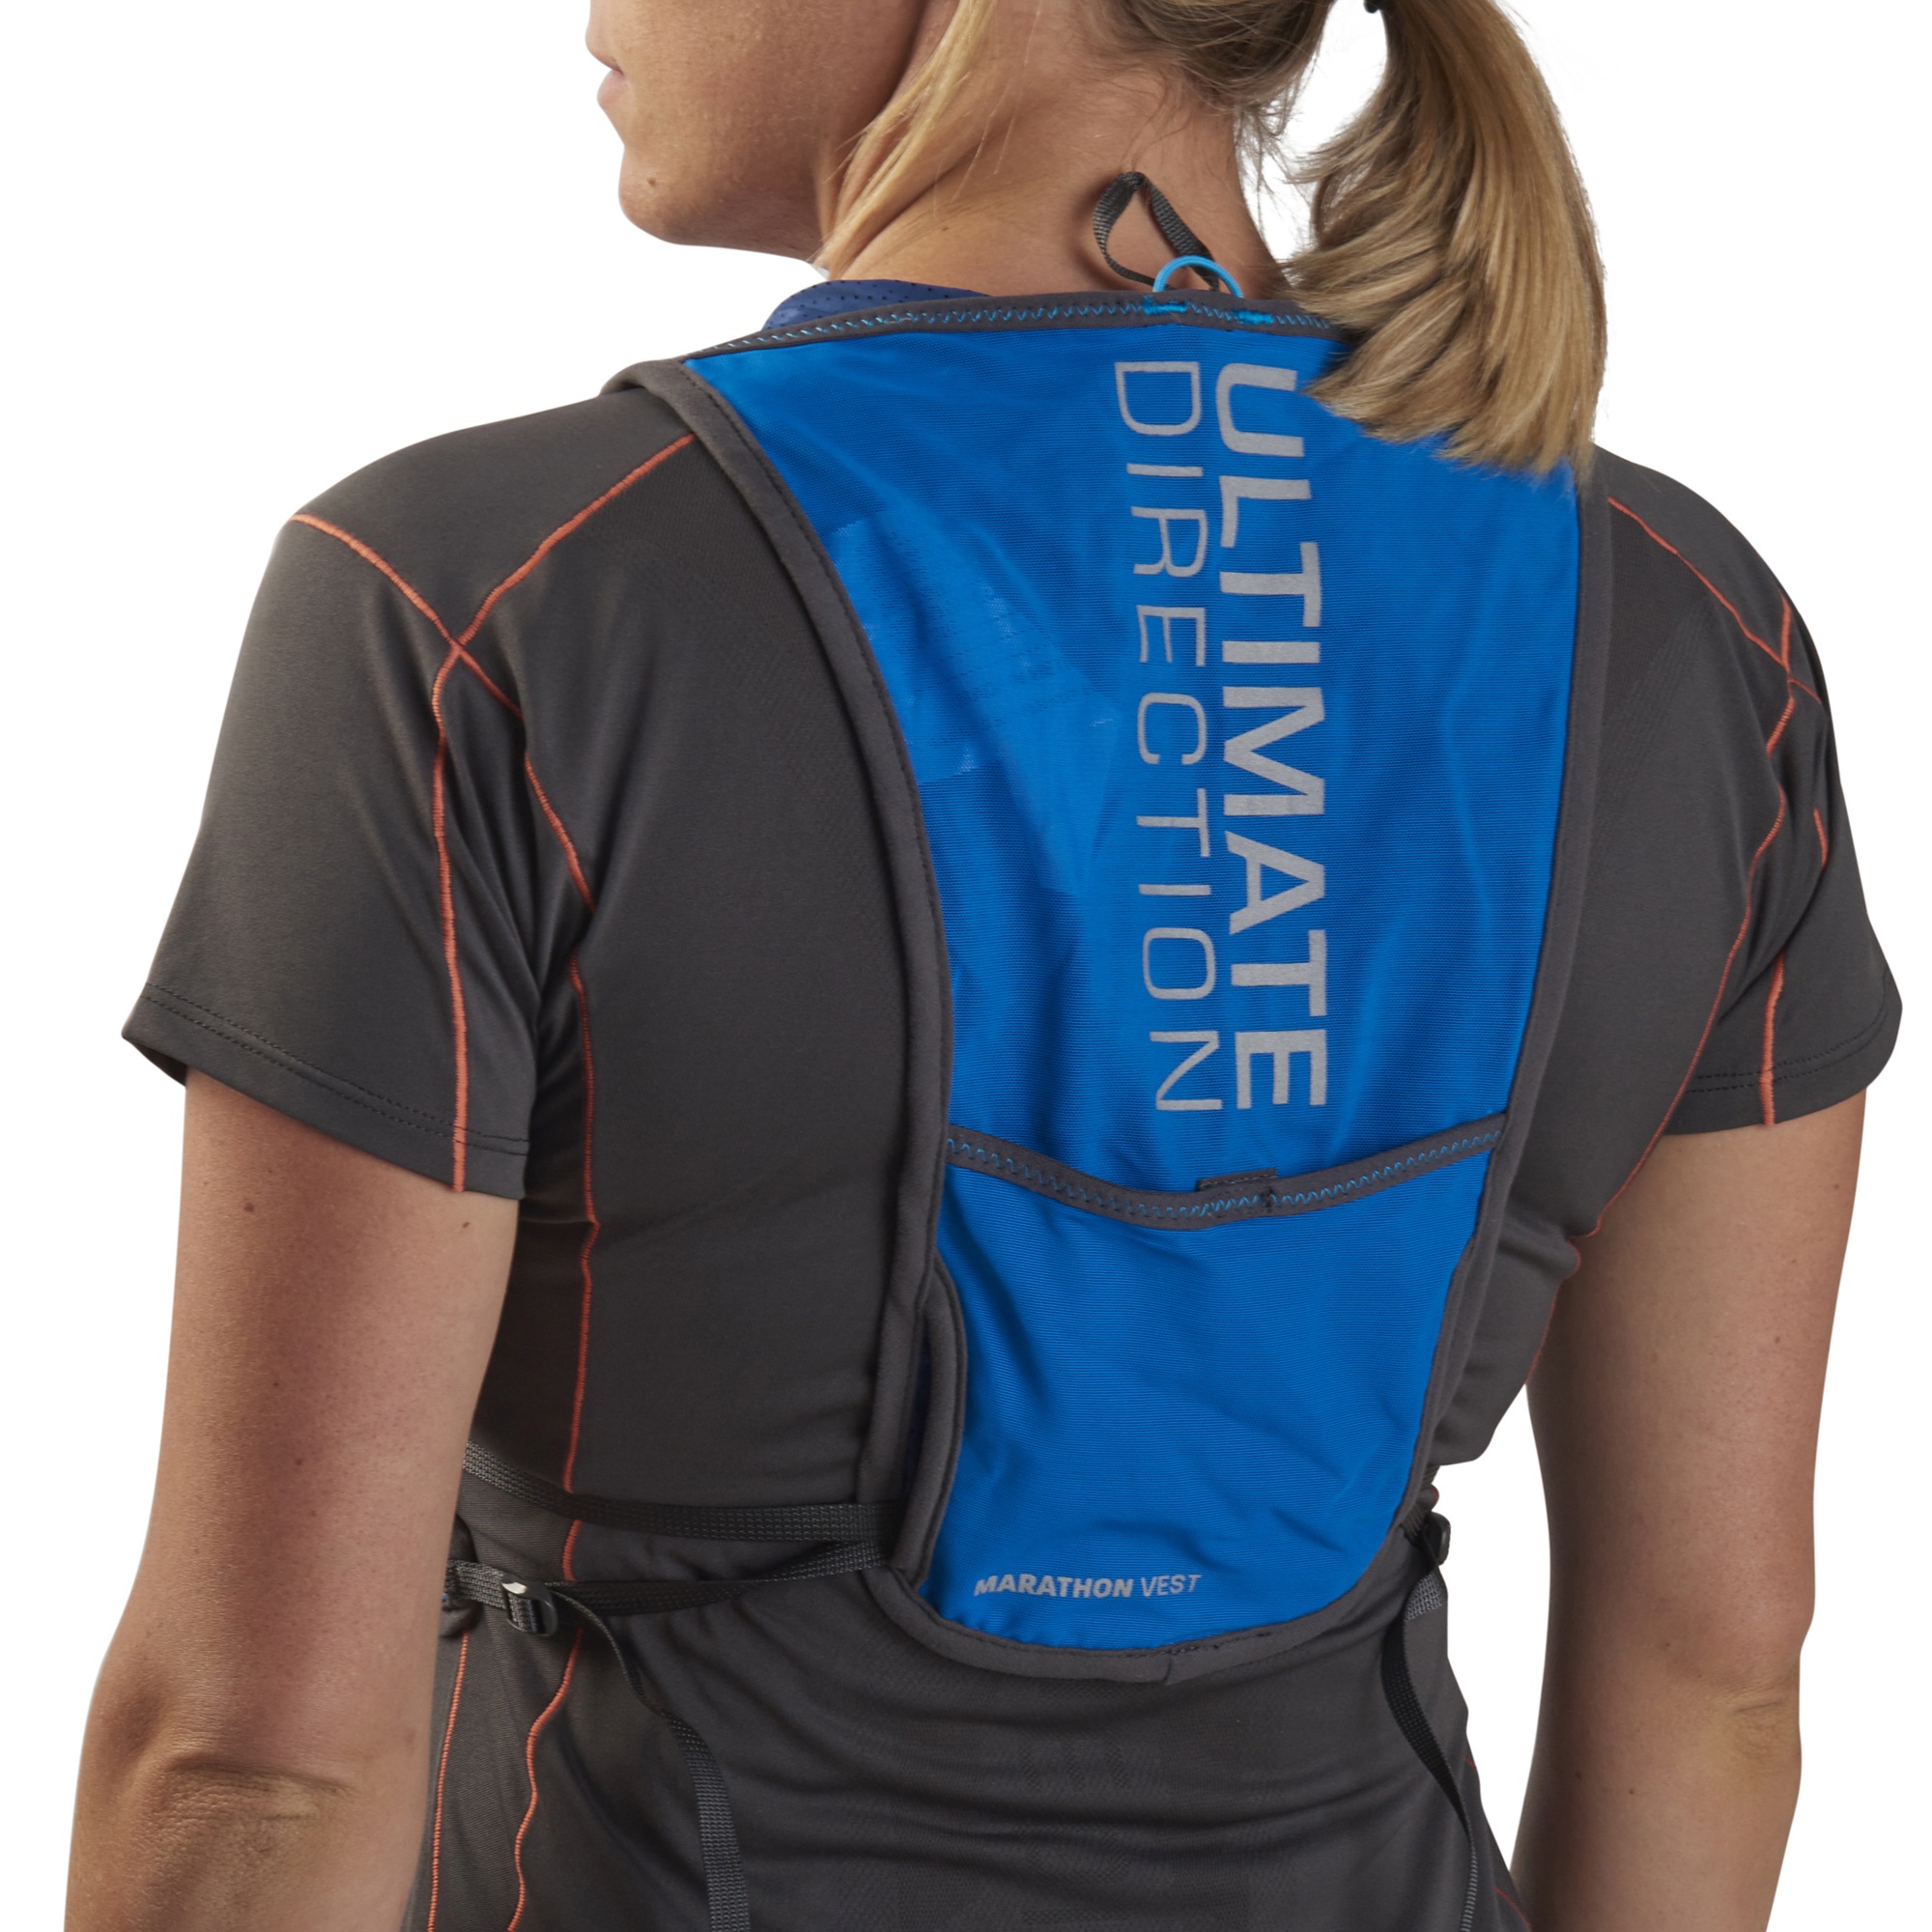 Ultimate Direction Marathon Vest v2 in Blue Size XS/Small